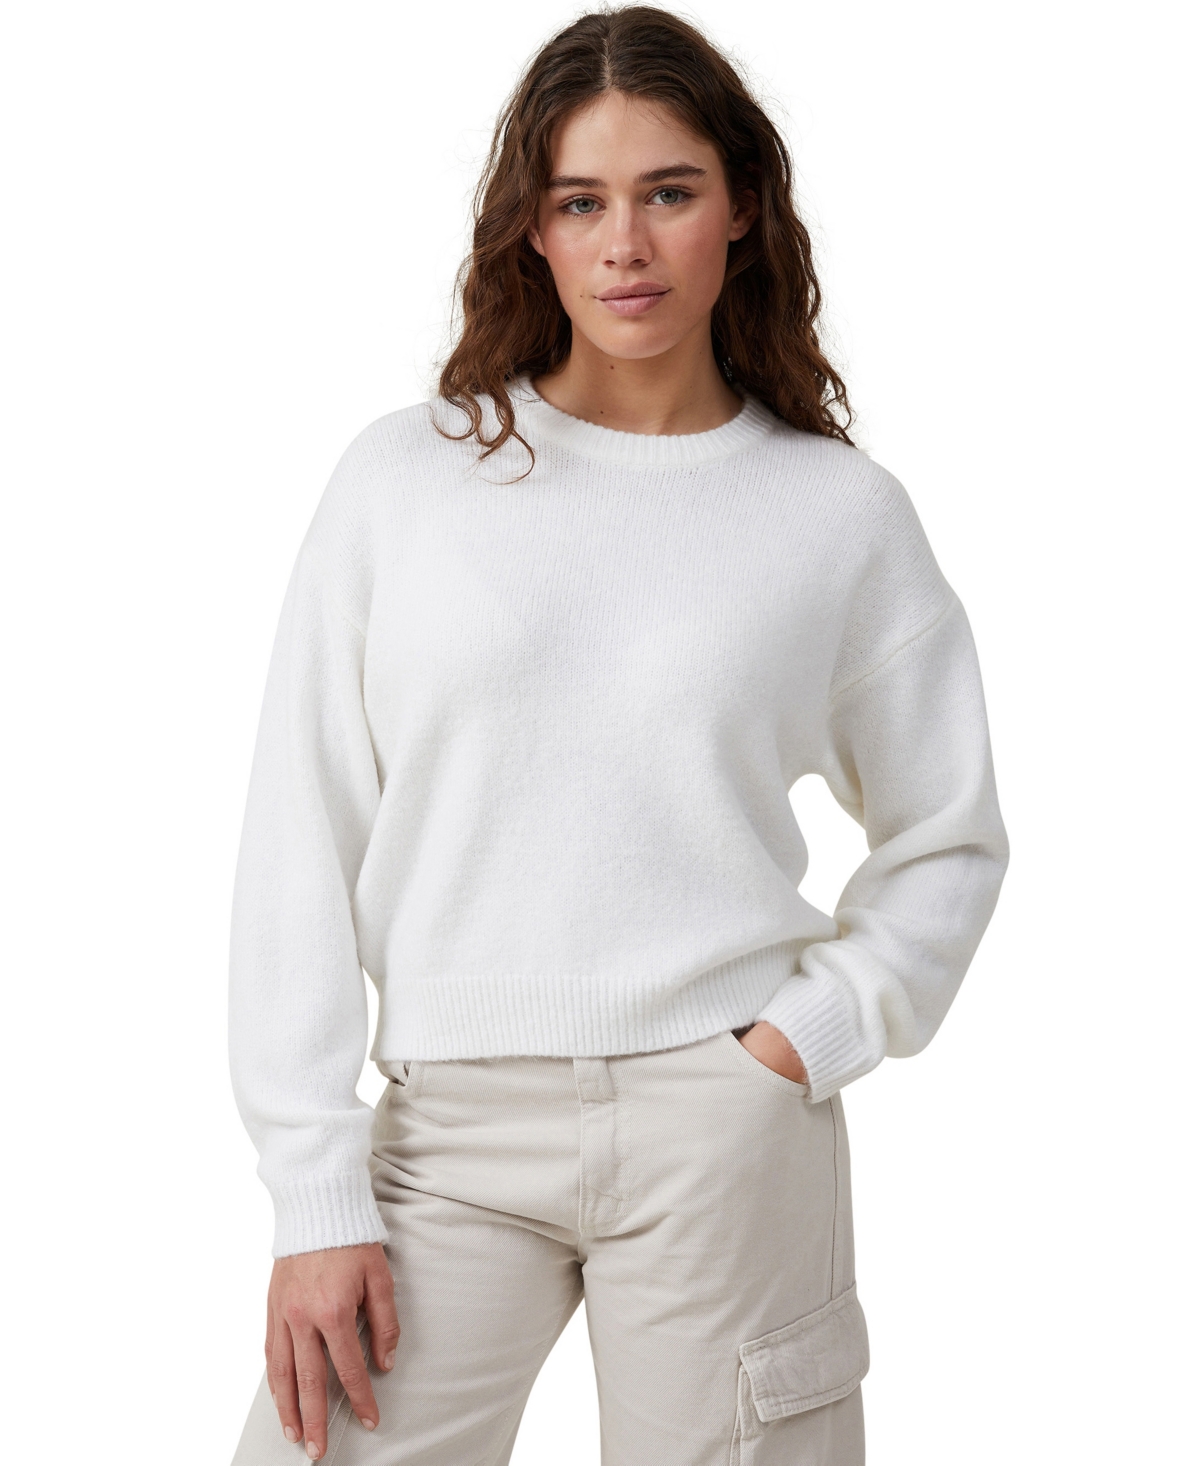 Women's Everything Crew Neck Pullover Sweater - Black